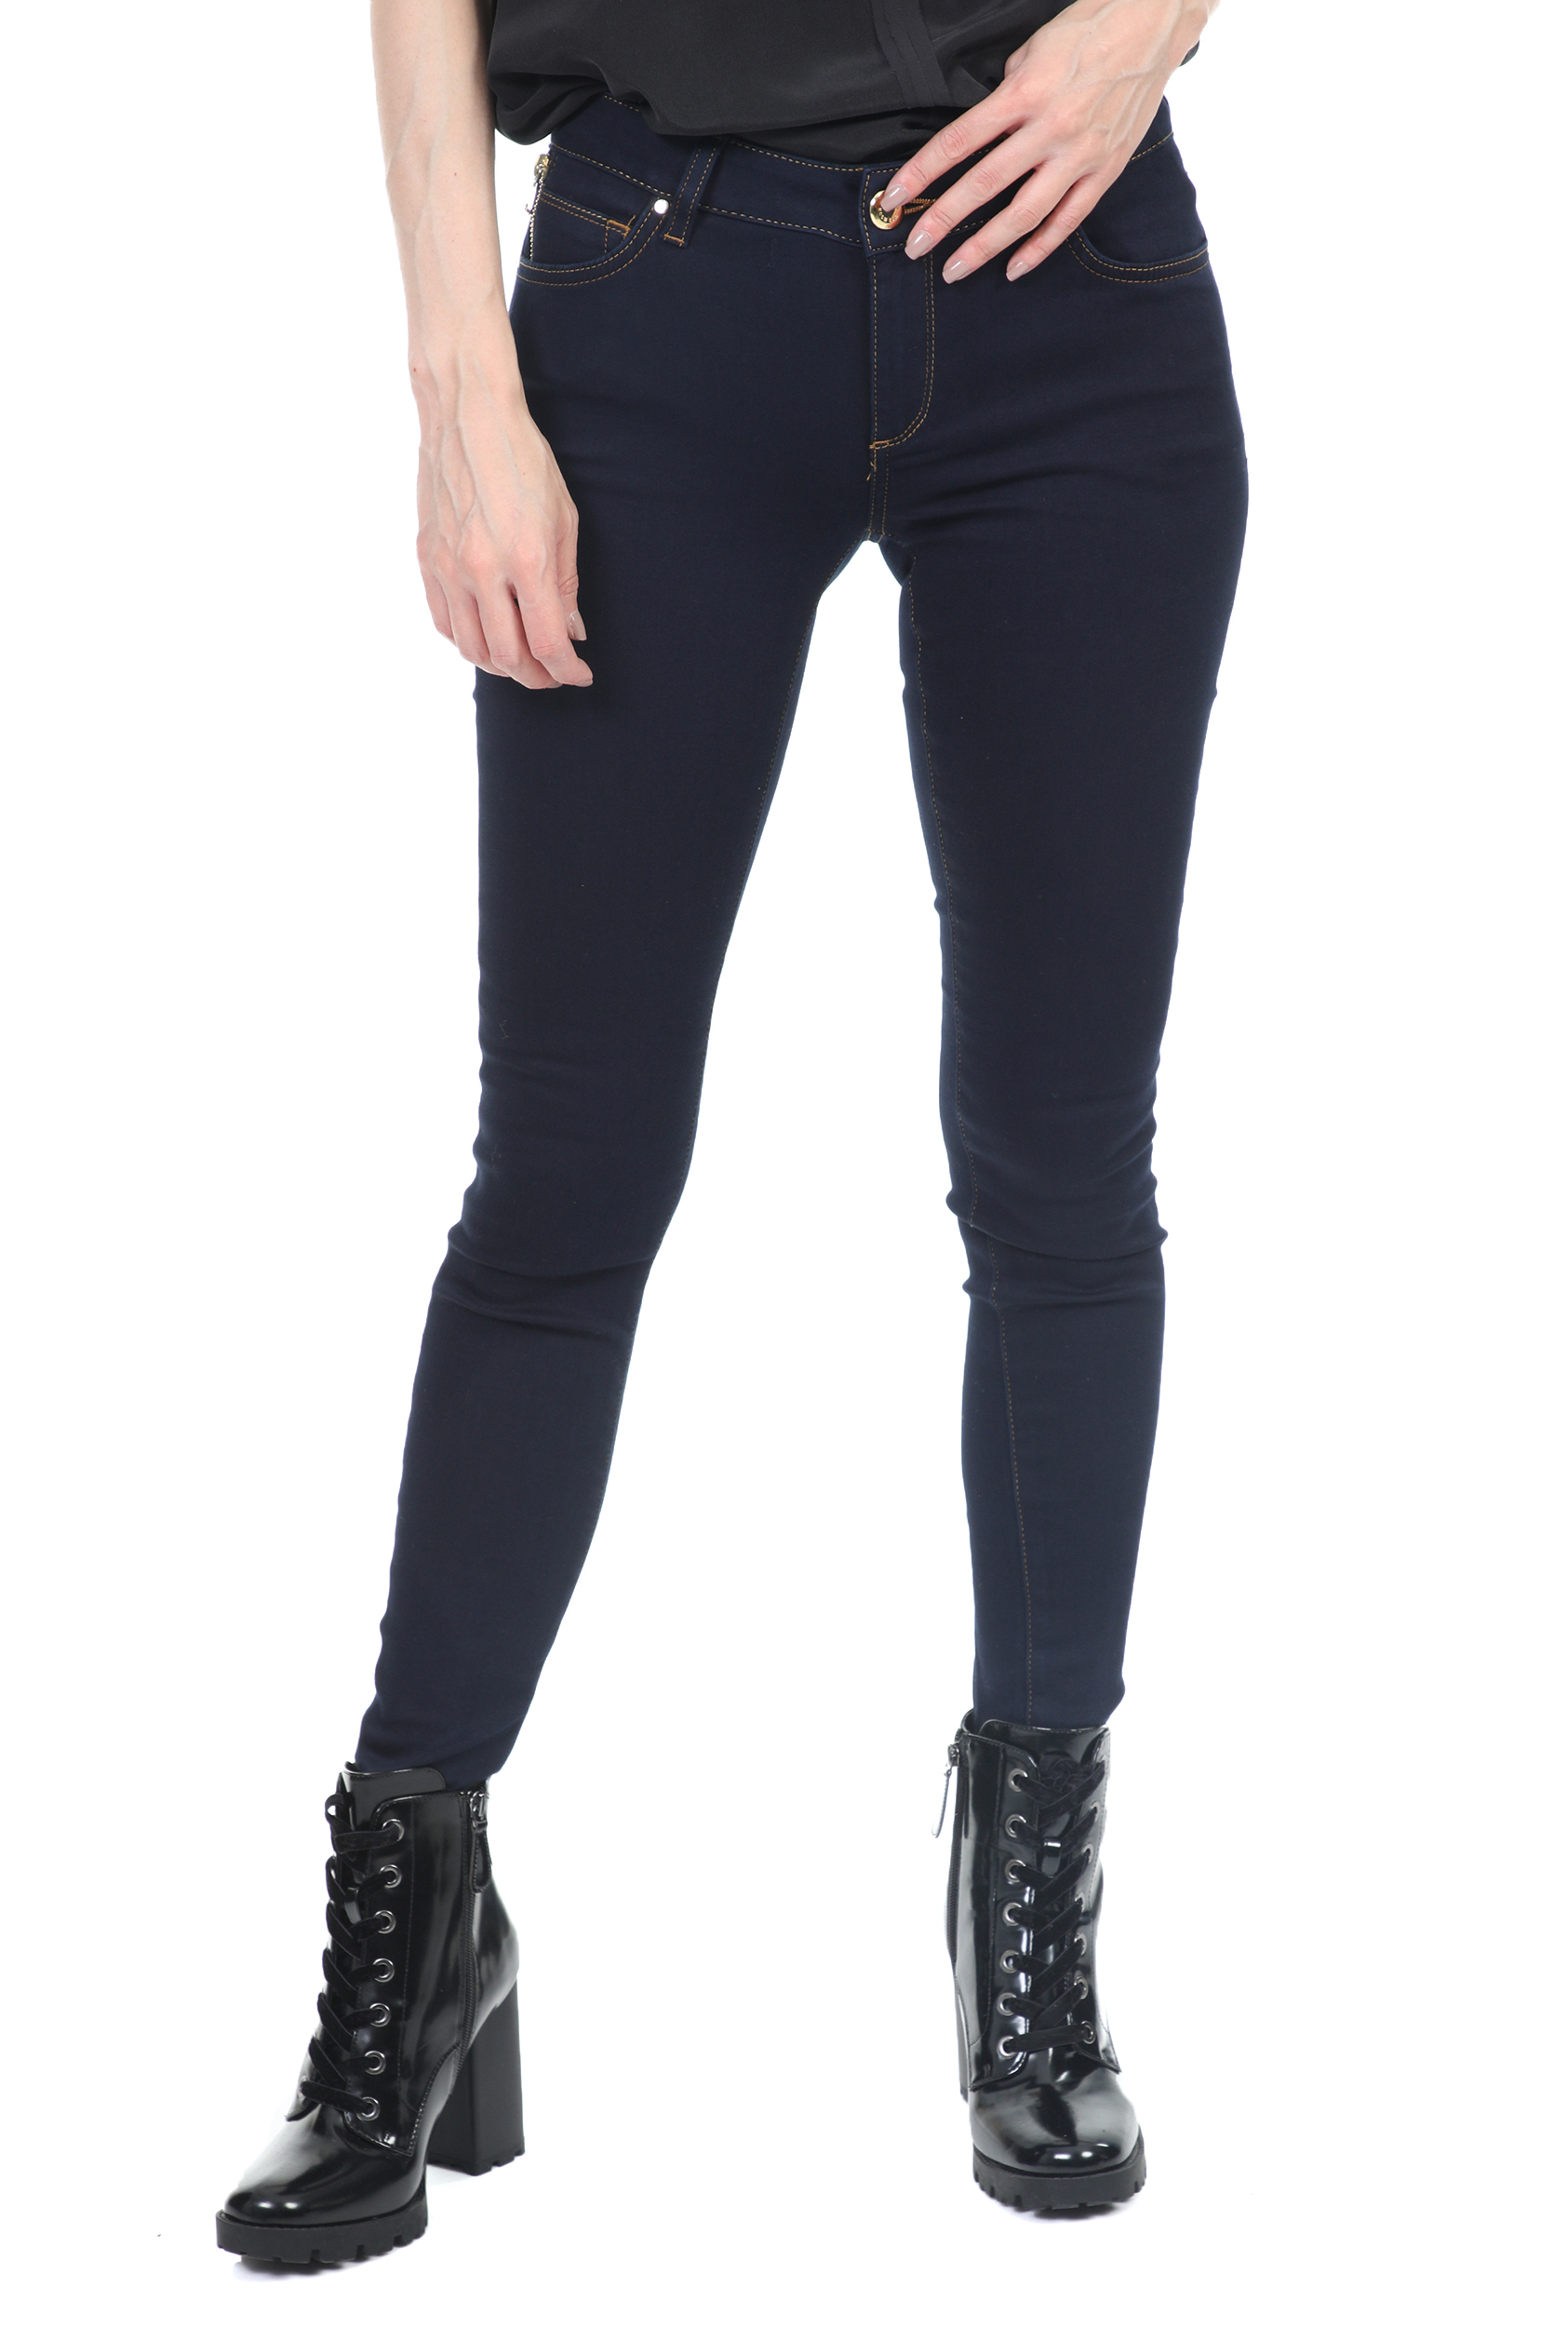 MOS MOSH – Γυναικειο παντελονι τζιν MOS MOSH Victoria 7/8 Silk Touch Jeans μπλε